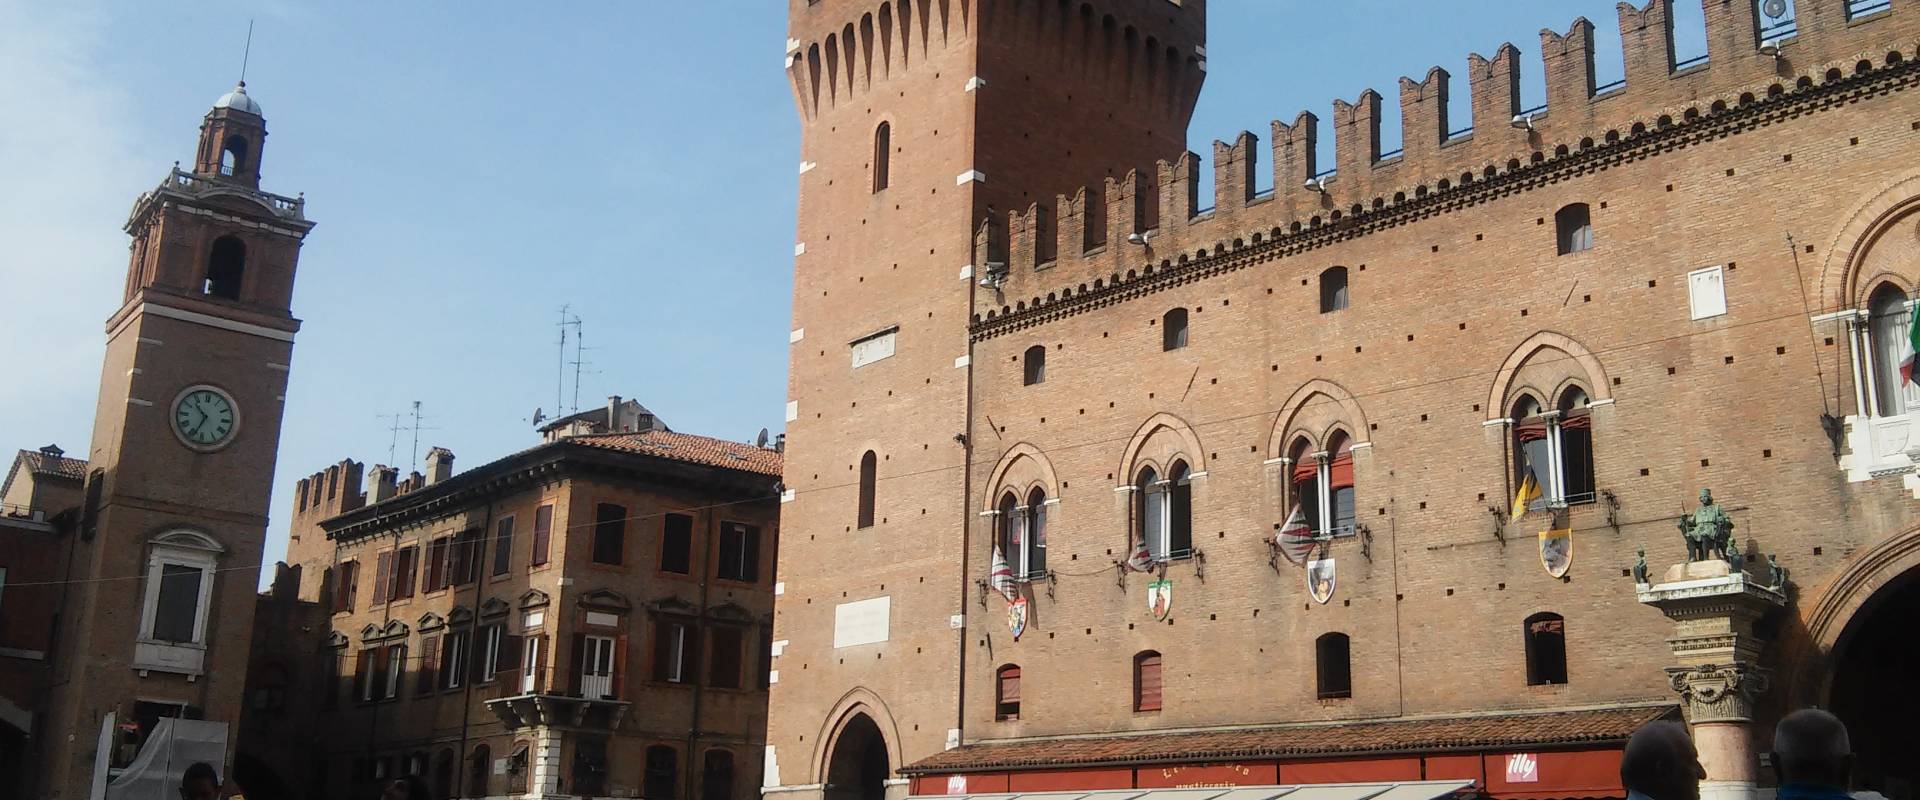 Castello degli Estensi di Ferrara foto di Tommyceru